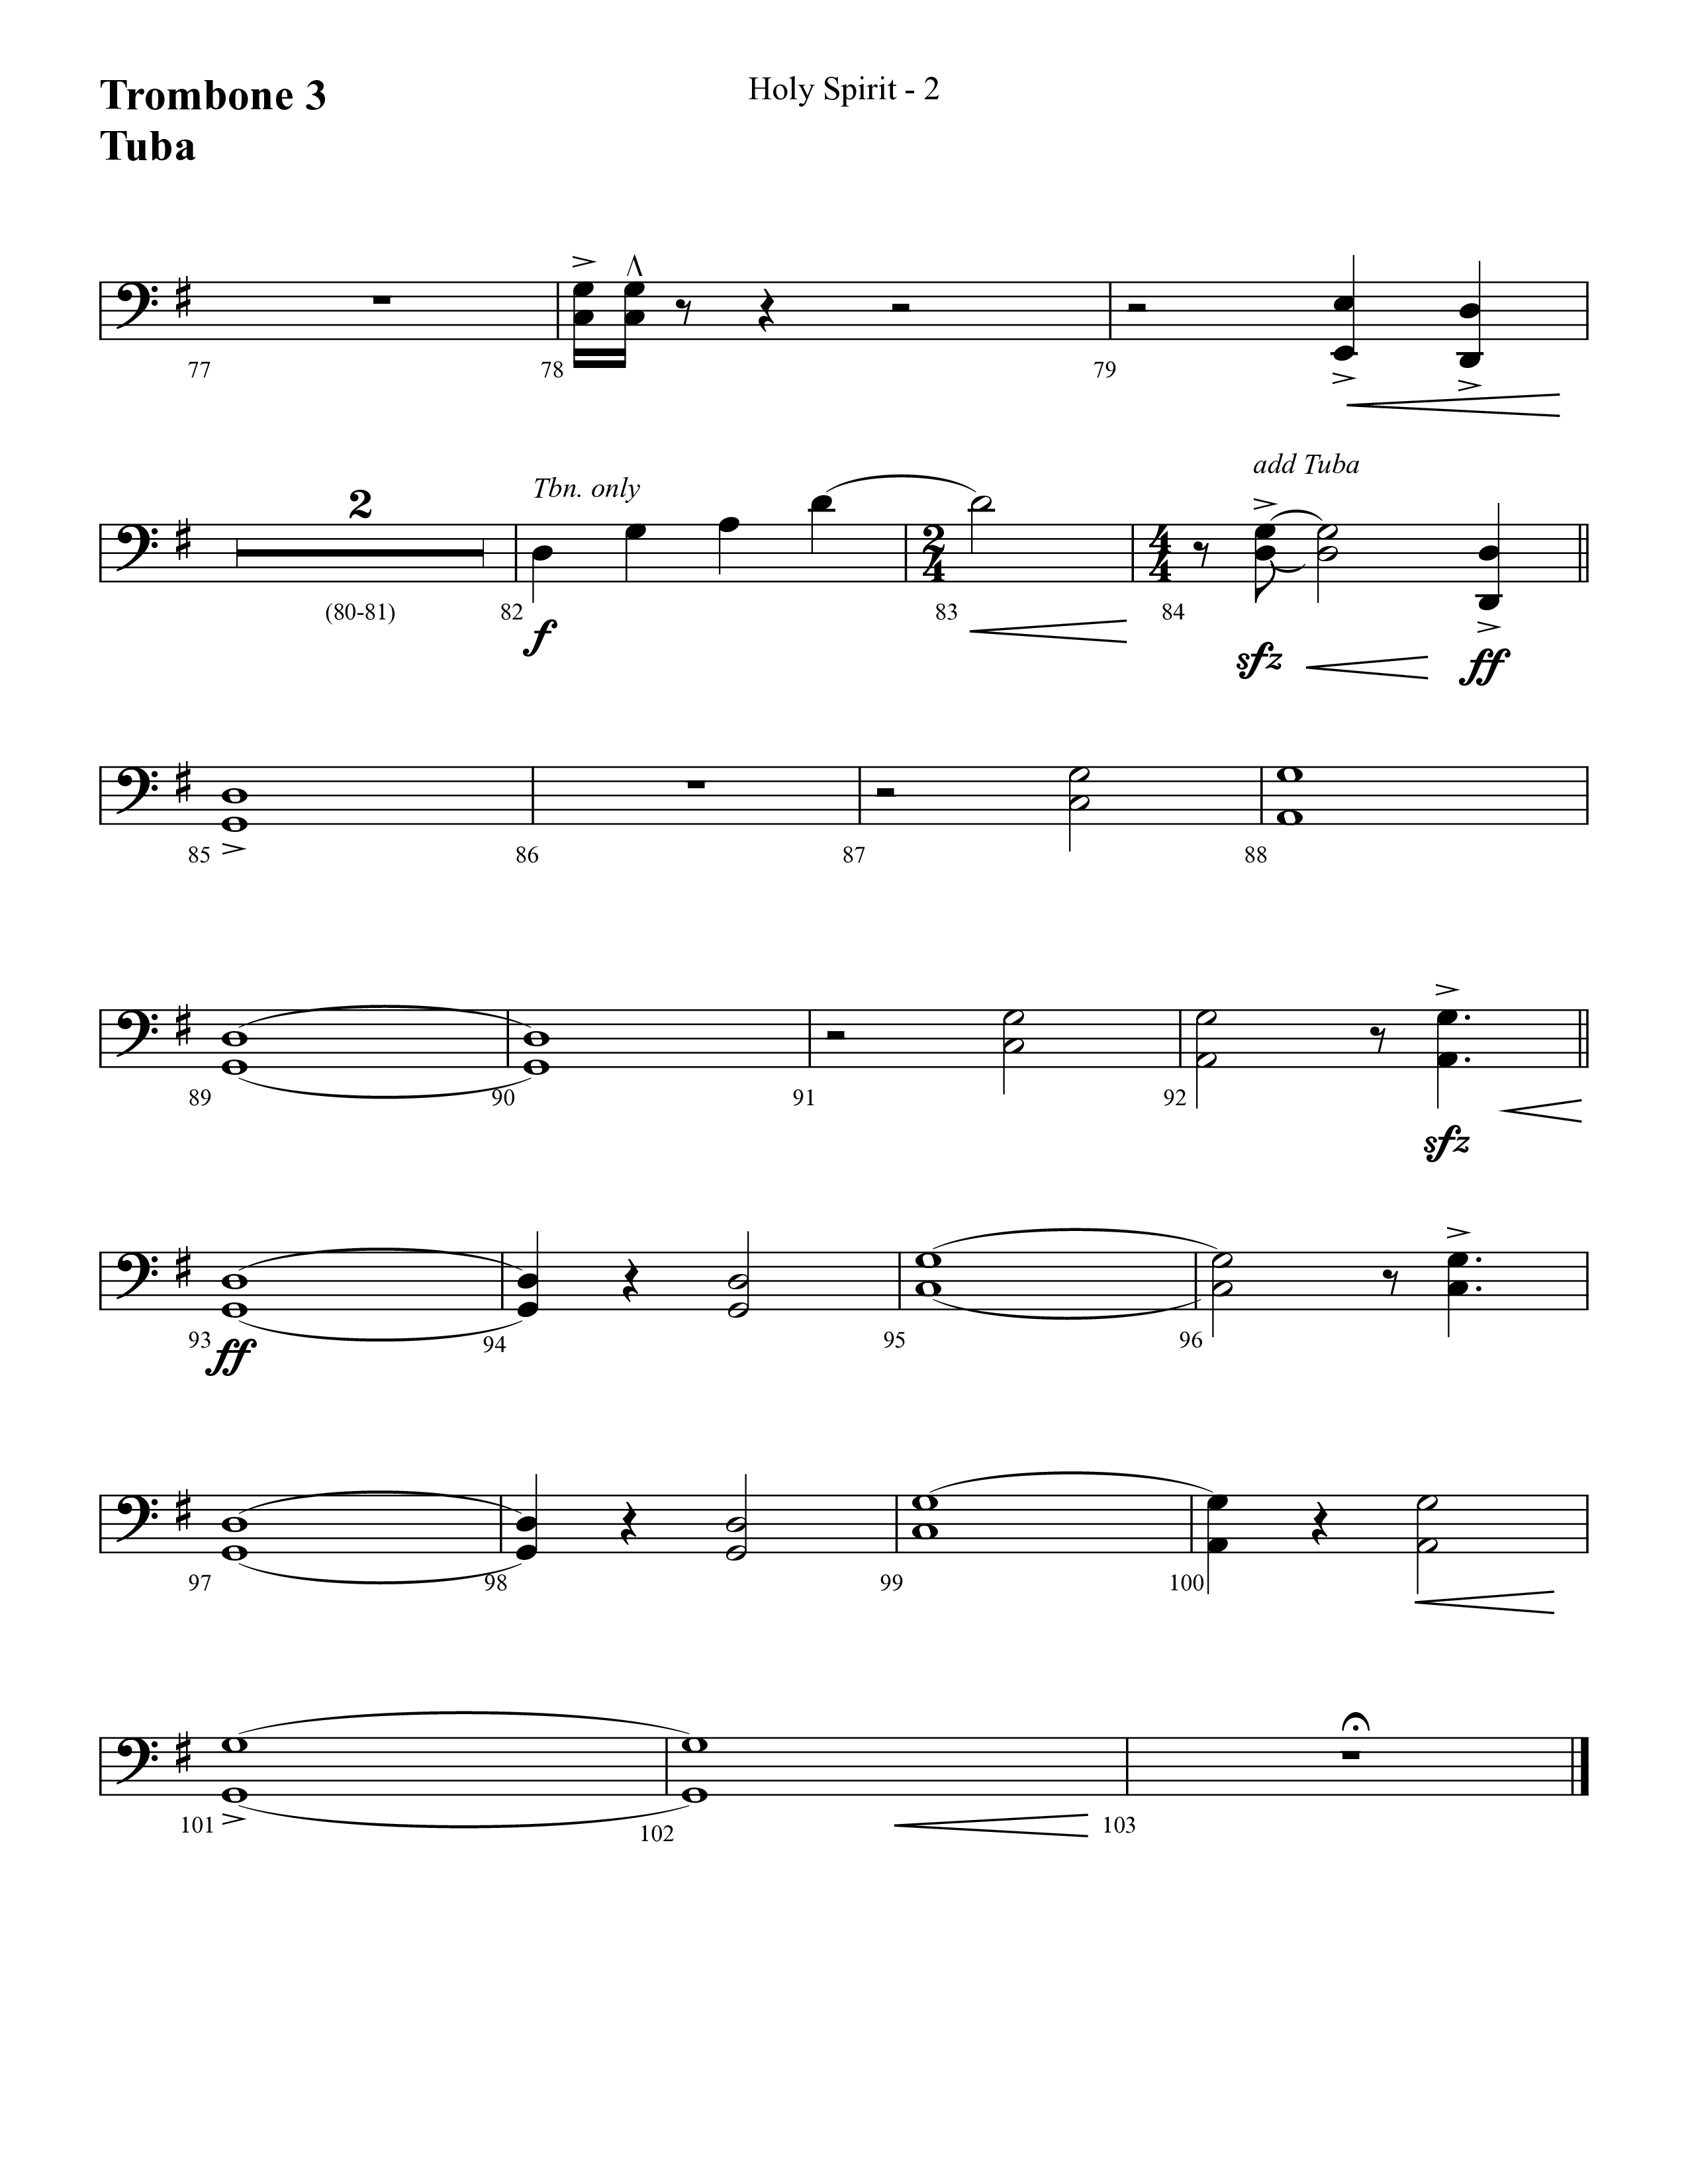 Holy Spirit  (Choral Anthem SATB) Trombone 3/Tuba (Lifeway Choral / Arr. Cliff Duren)